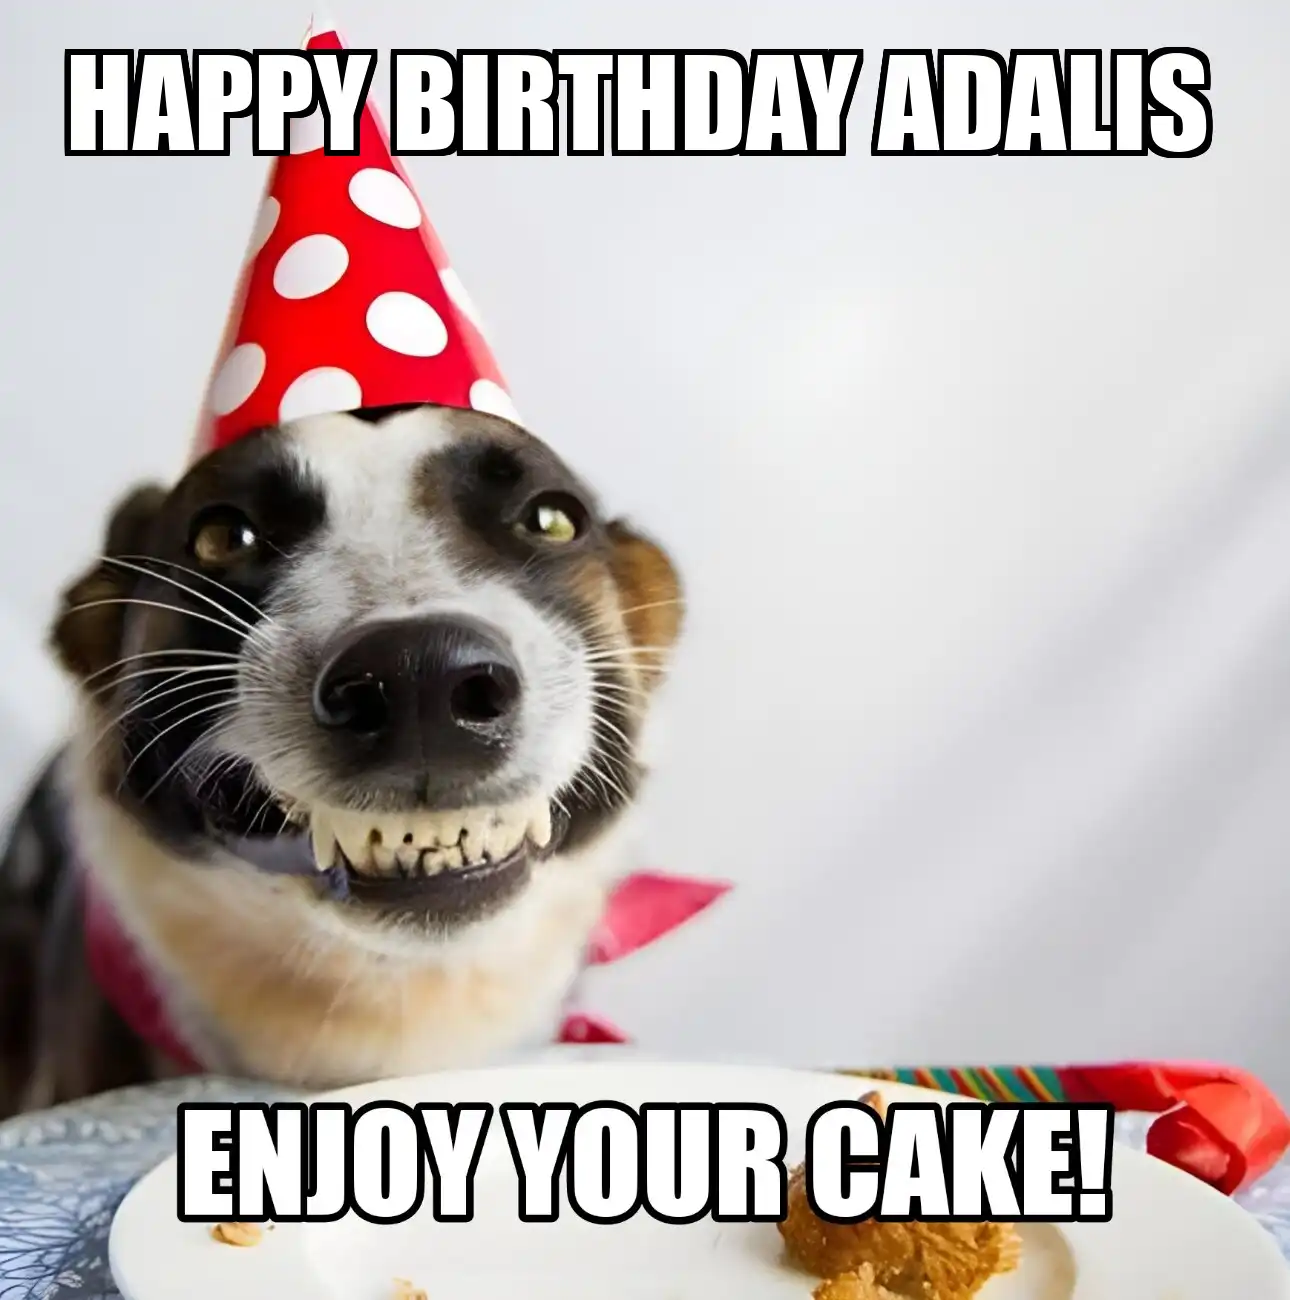 Happy Birthday Adalis Enjoy Your Cake Dog Meme